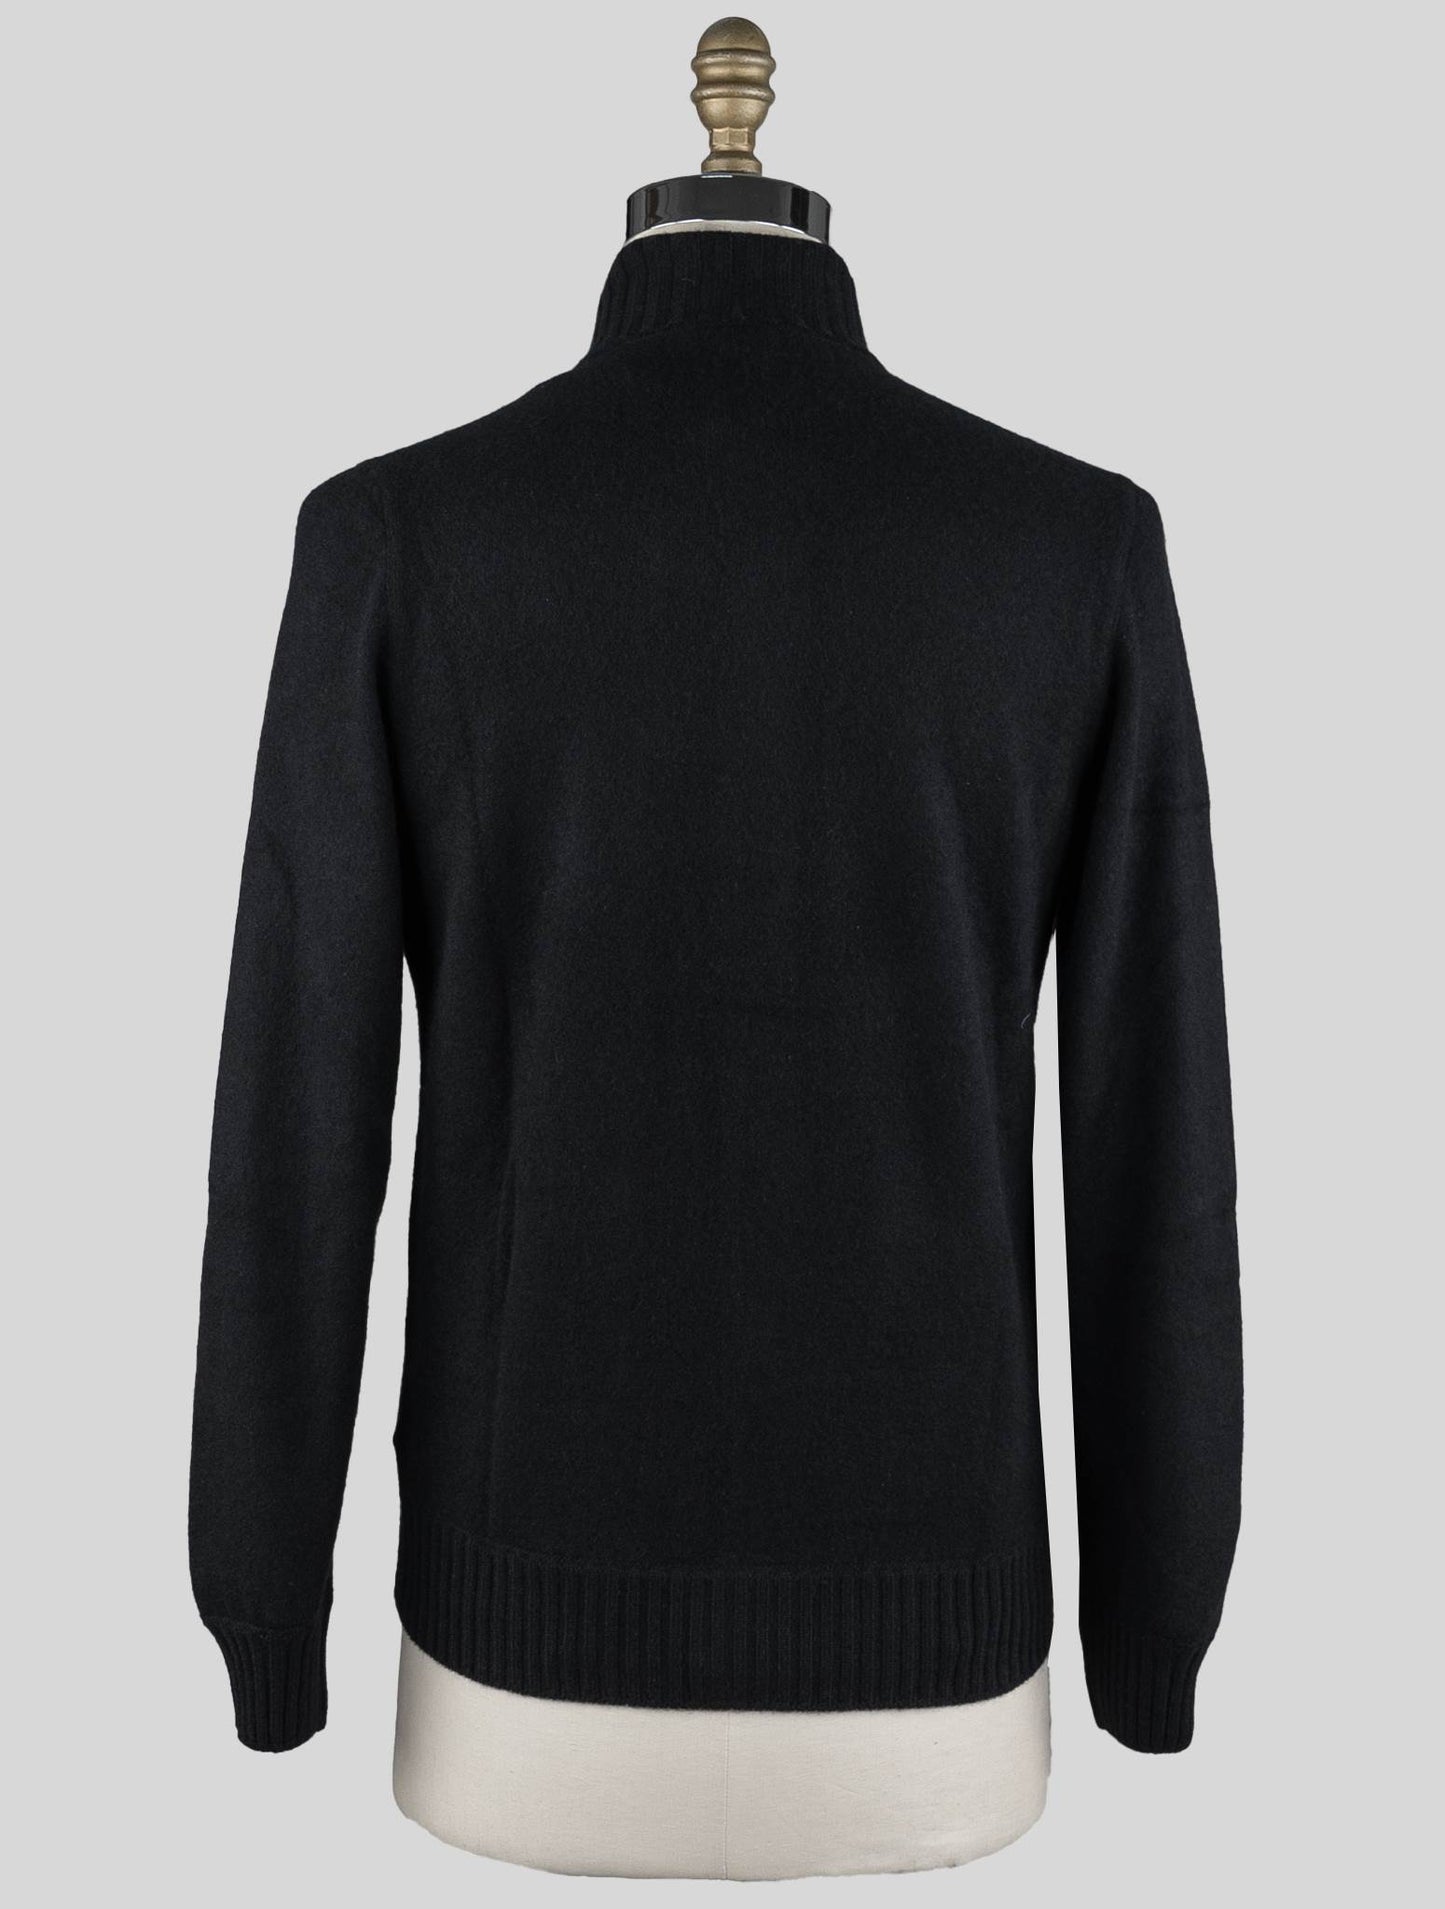 Barba Napoli Black Cashmere Sweater Cardigan